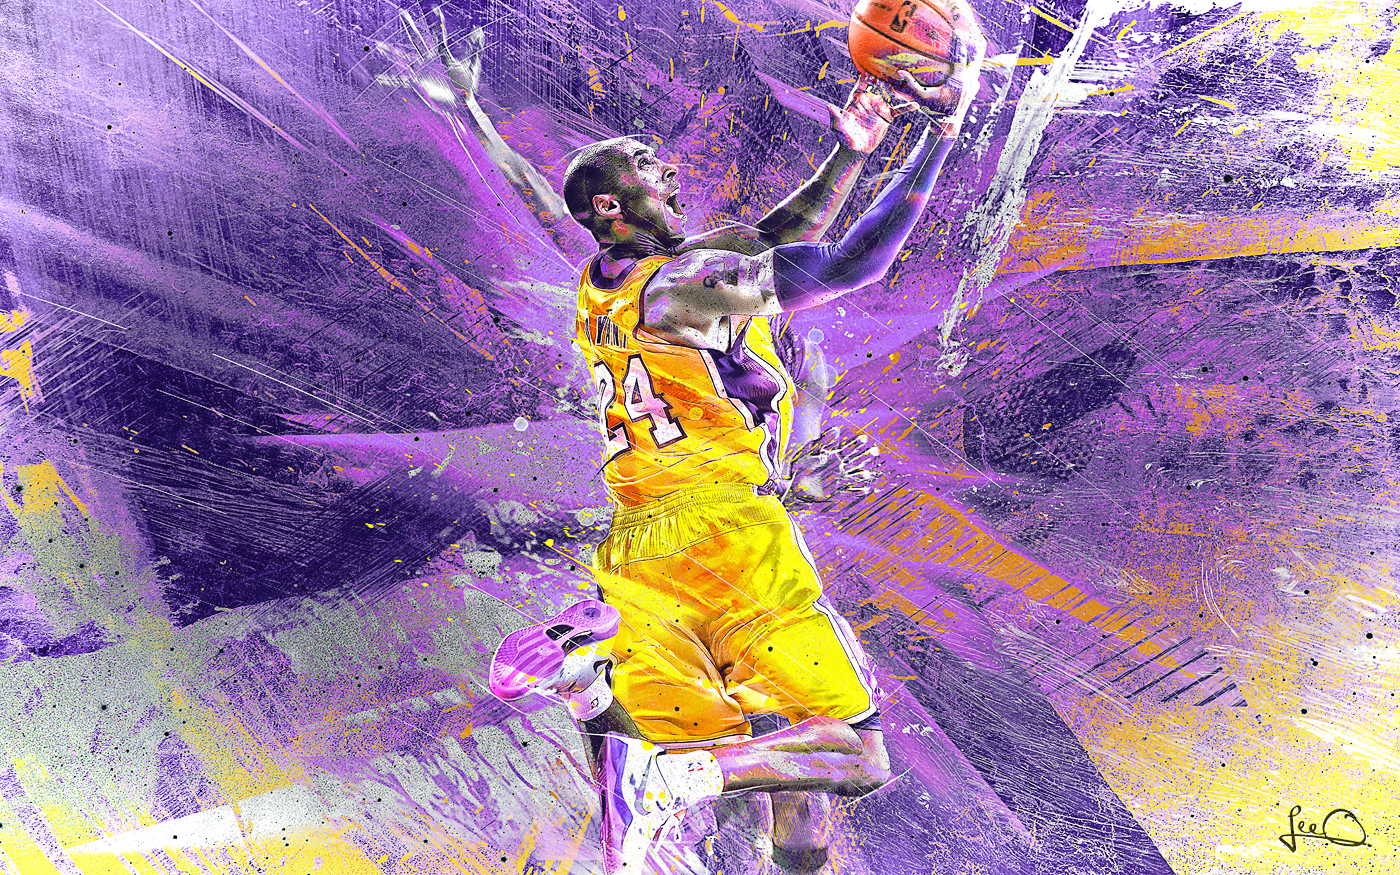 Kobe Bryant NBA Artwork on Behance